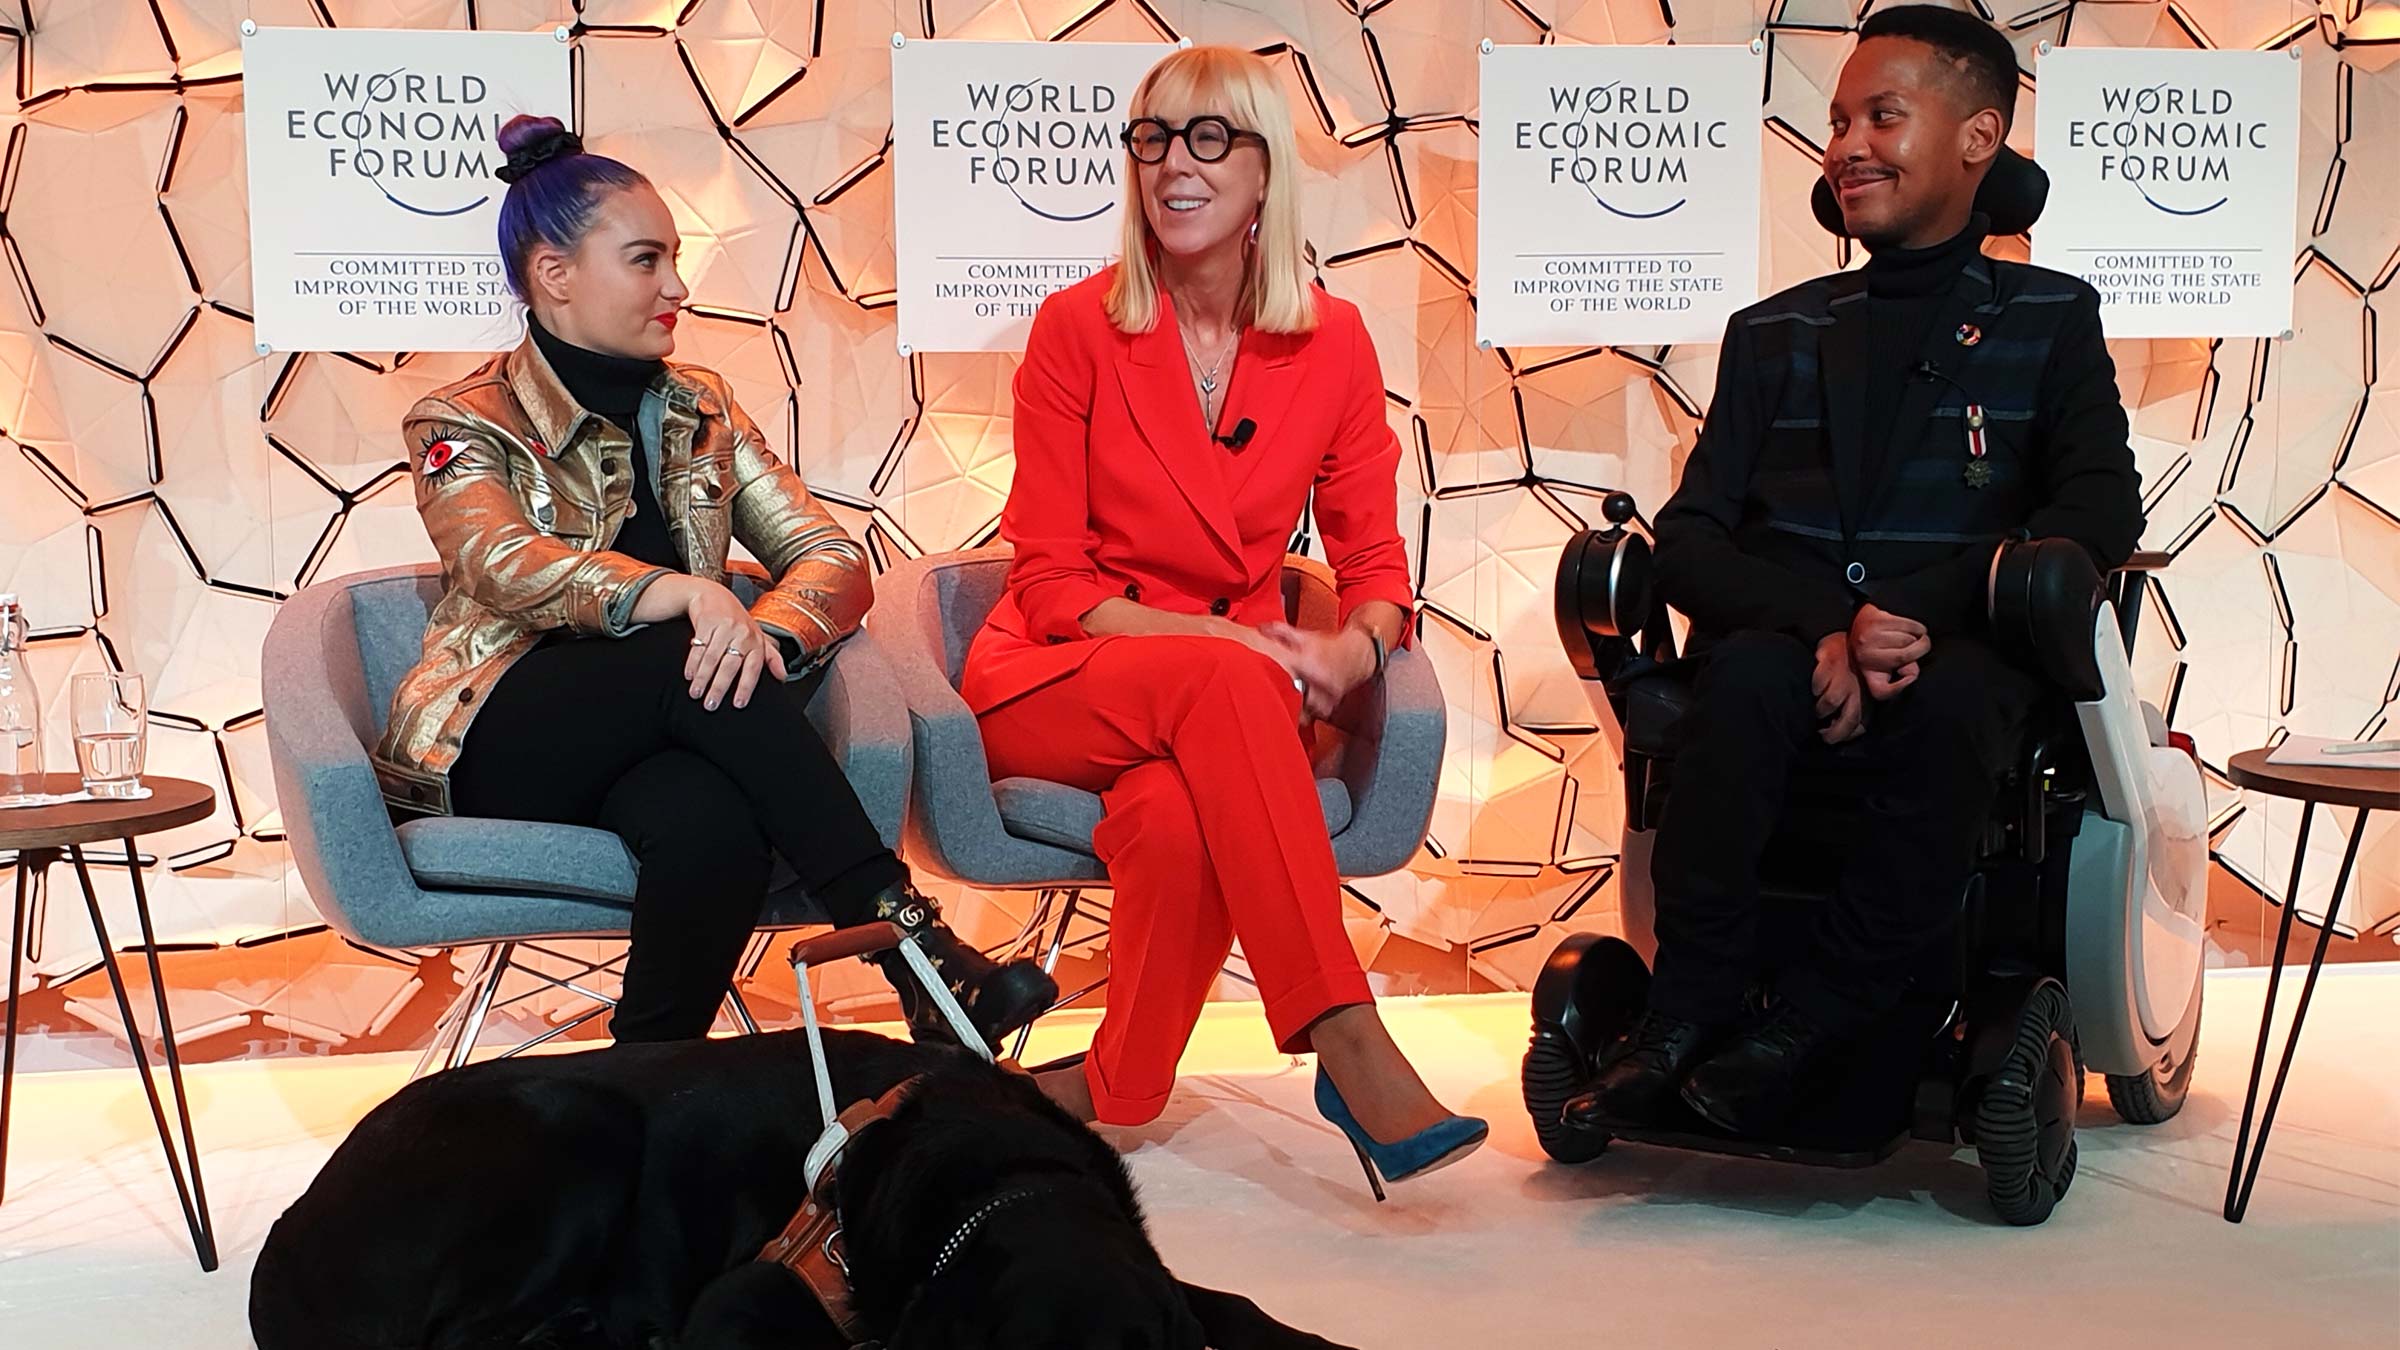 Caroline and fellow panelists at the World Economic Forum